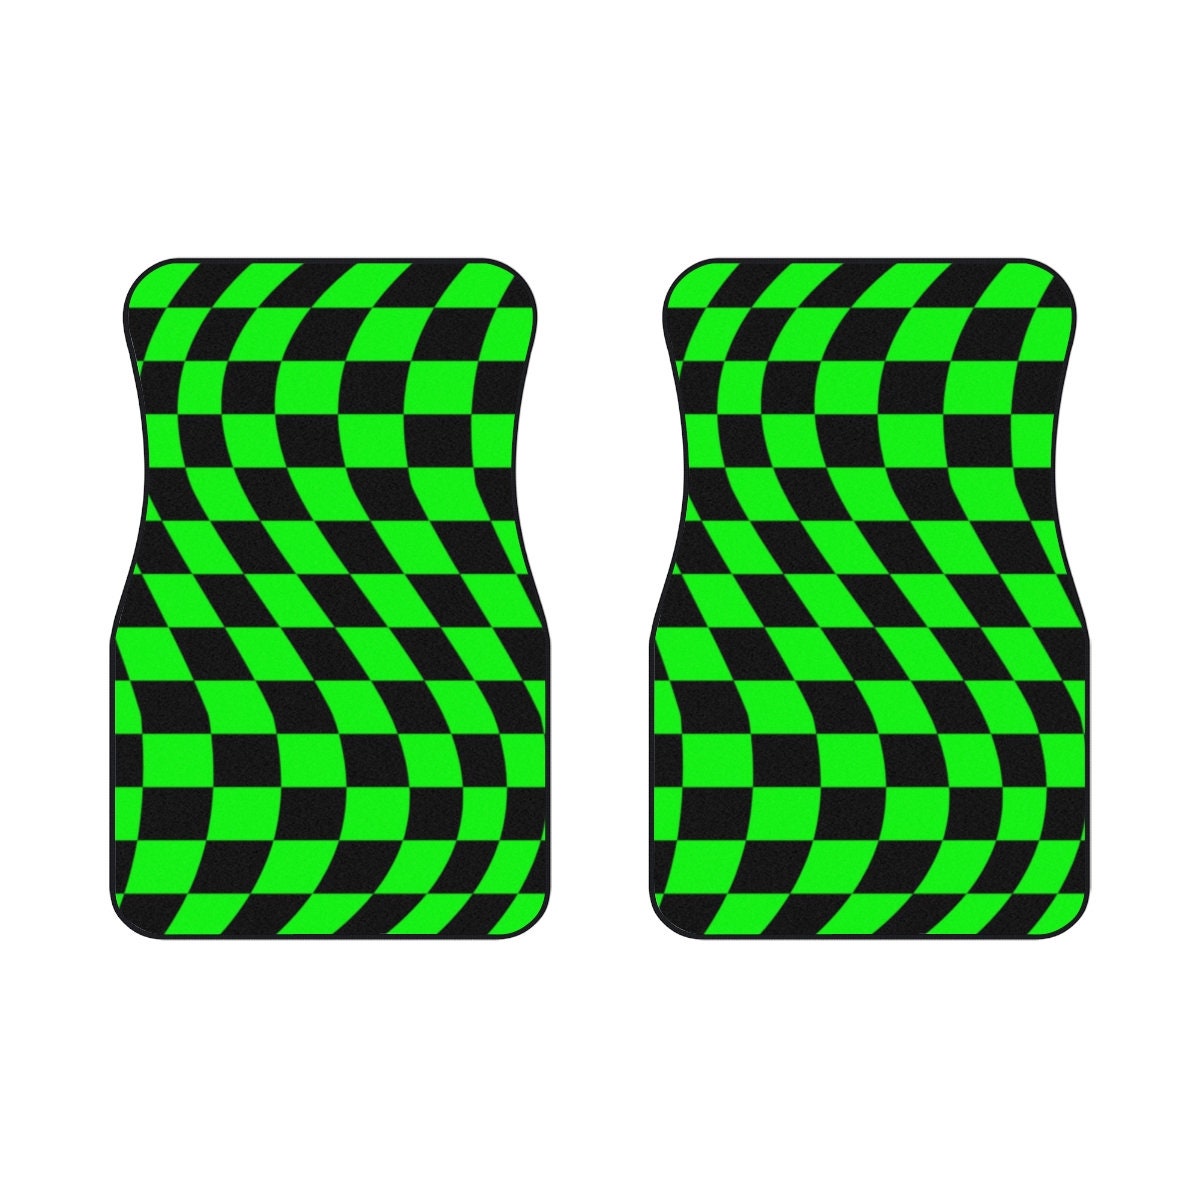 Checkerboard & Swirls Blank Page Journal 5x7 Inches 